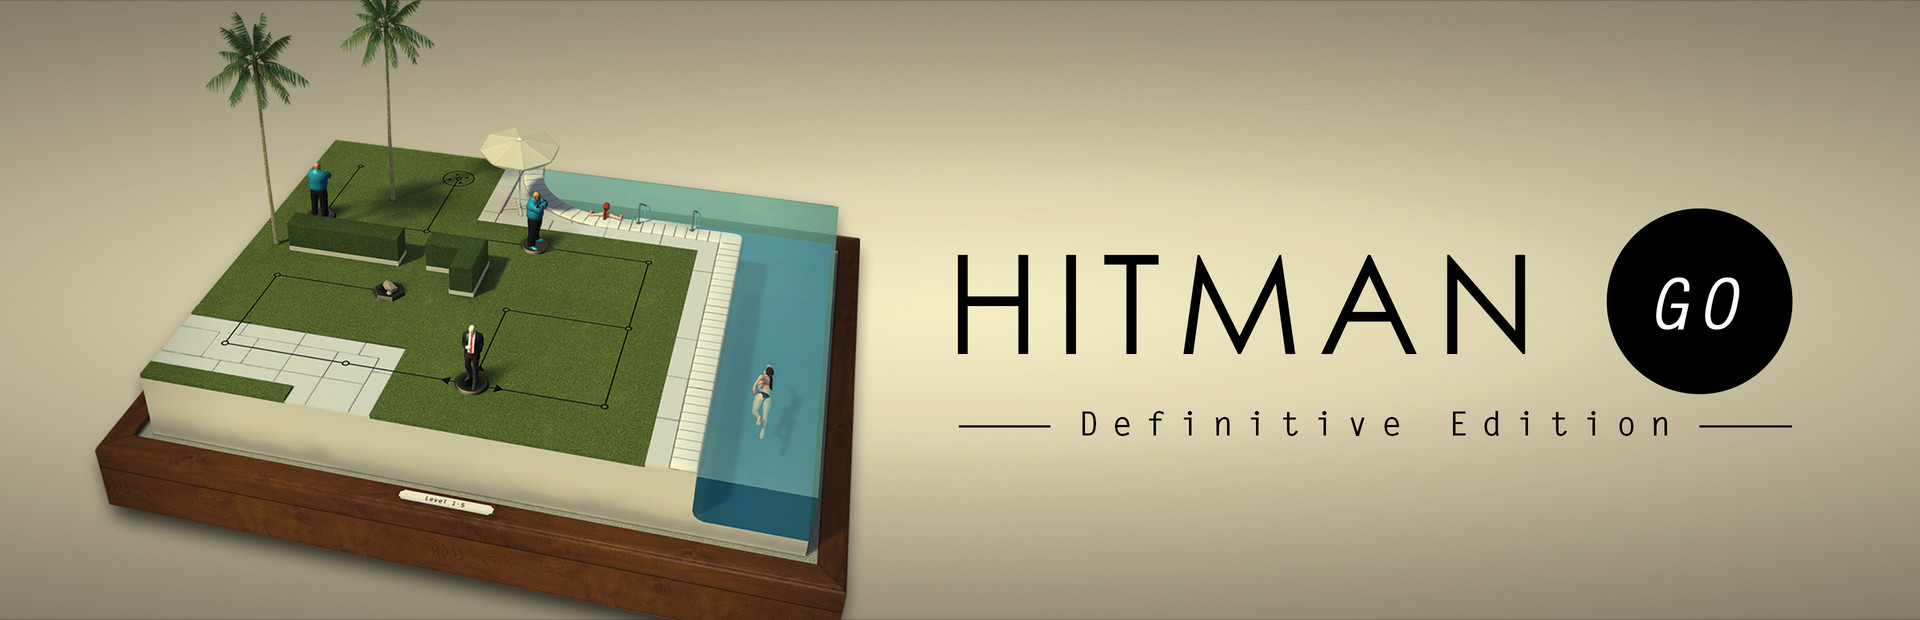 Hitman GO: Definitive Edition cover image